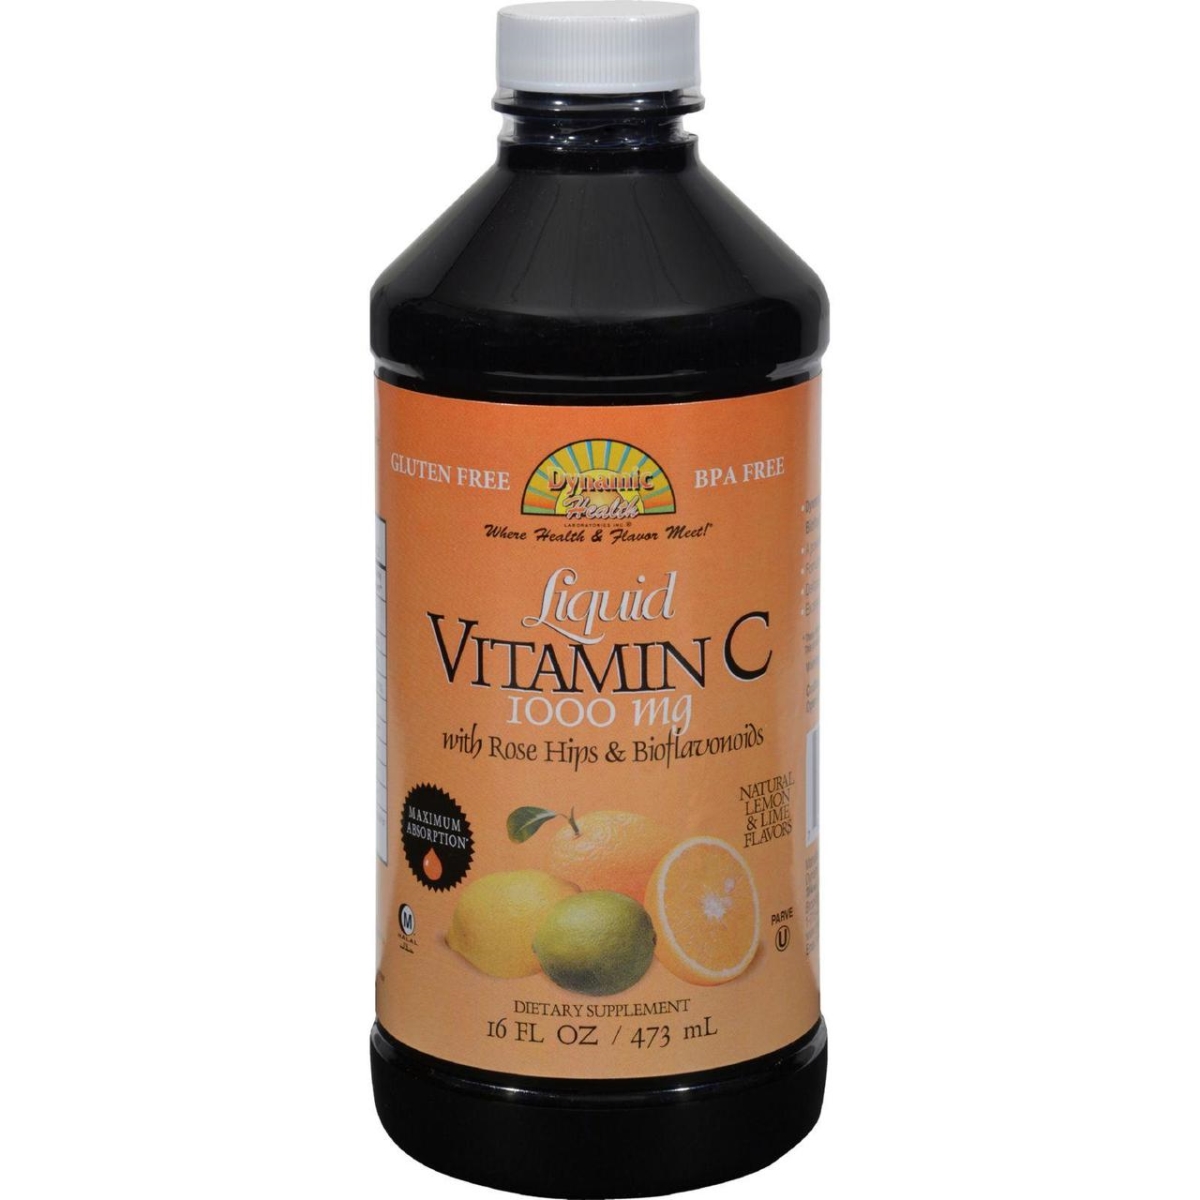 Dynamic Health Hg0673459 16 Fl Oz Liquid Vitamin C Natural Citrus, 1000 Mg